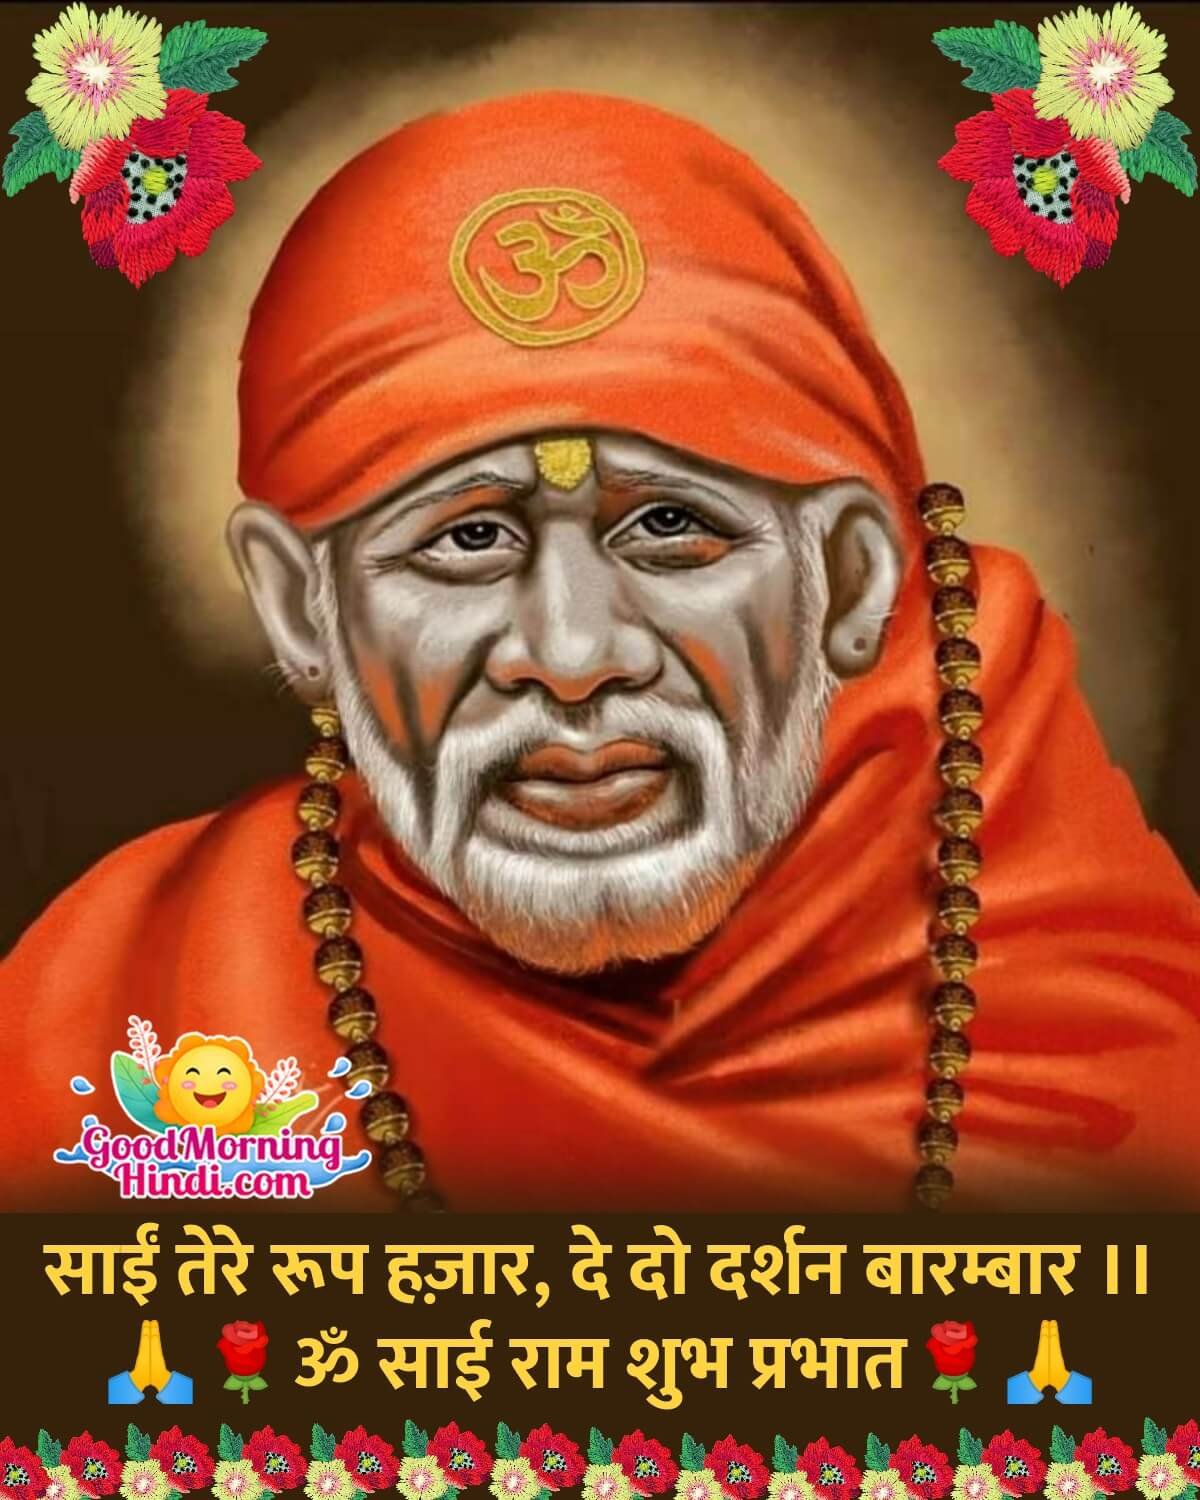 Good Morning Sai Baba Images In Hindi - Good Morning Wishes & Images In  Hindi